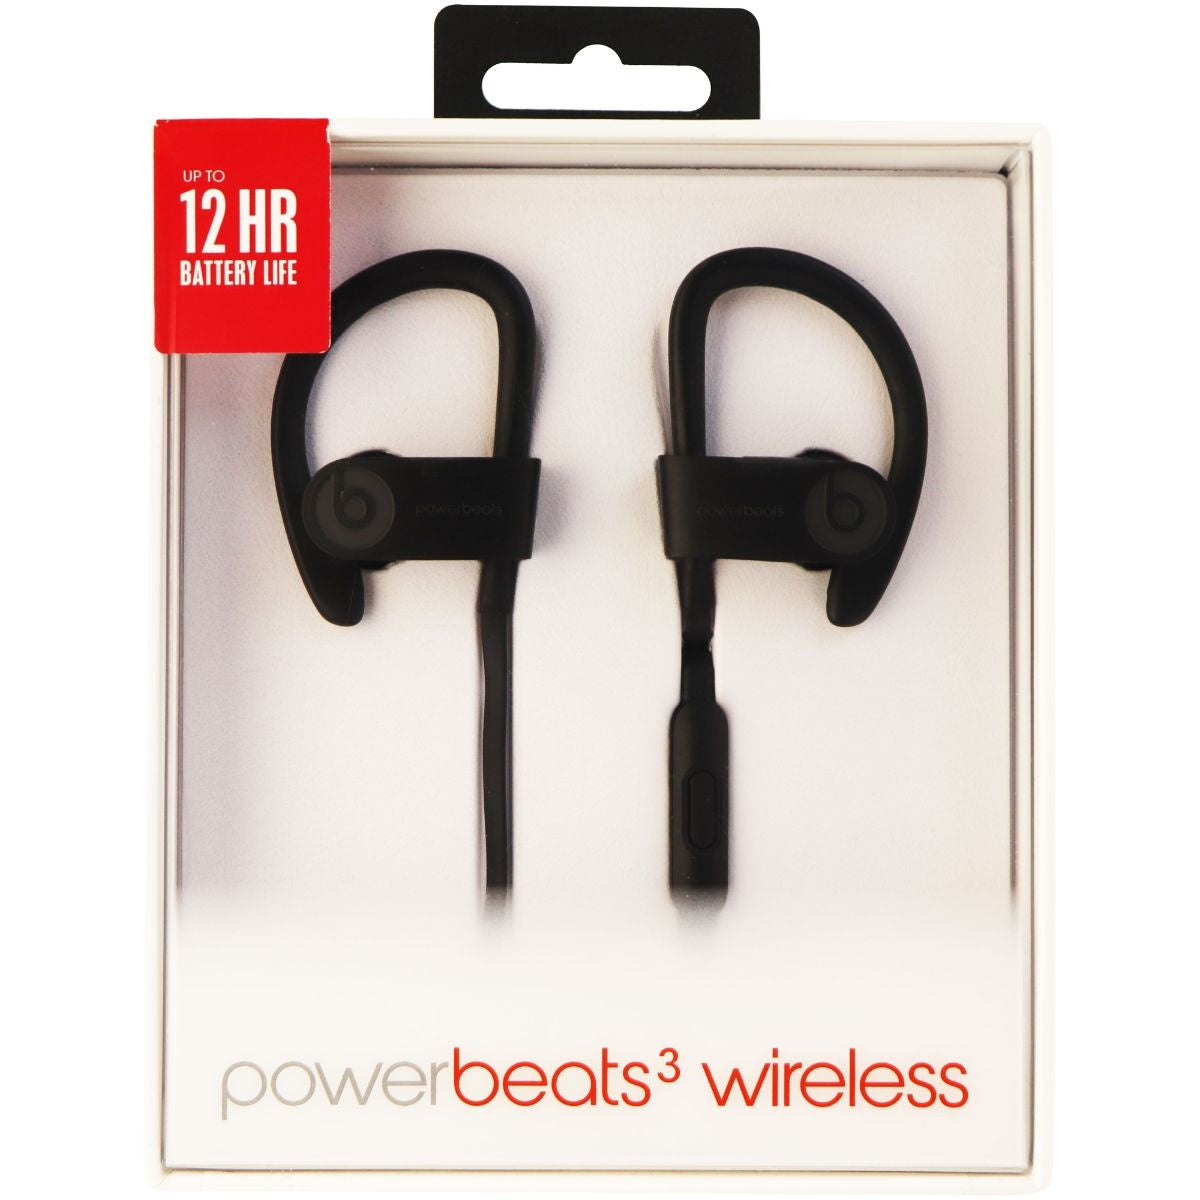 Beats Powerbeats3 Series Wireless Ear-Hook Headphones (ML8V2LL/A) - Black Portable Audio - Headphones Beats by Dr. Dre    - Simple Cell Bulk Wholesale Pricing - USA Seller